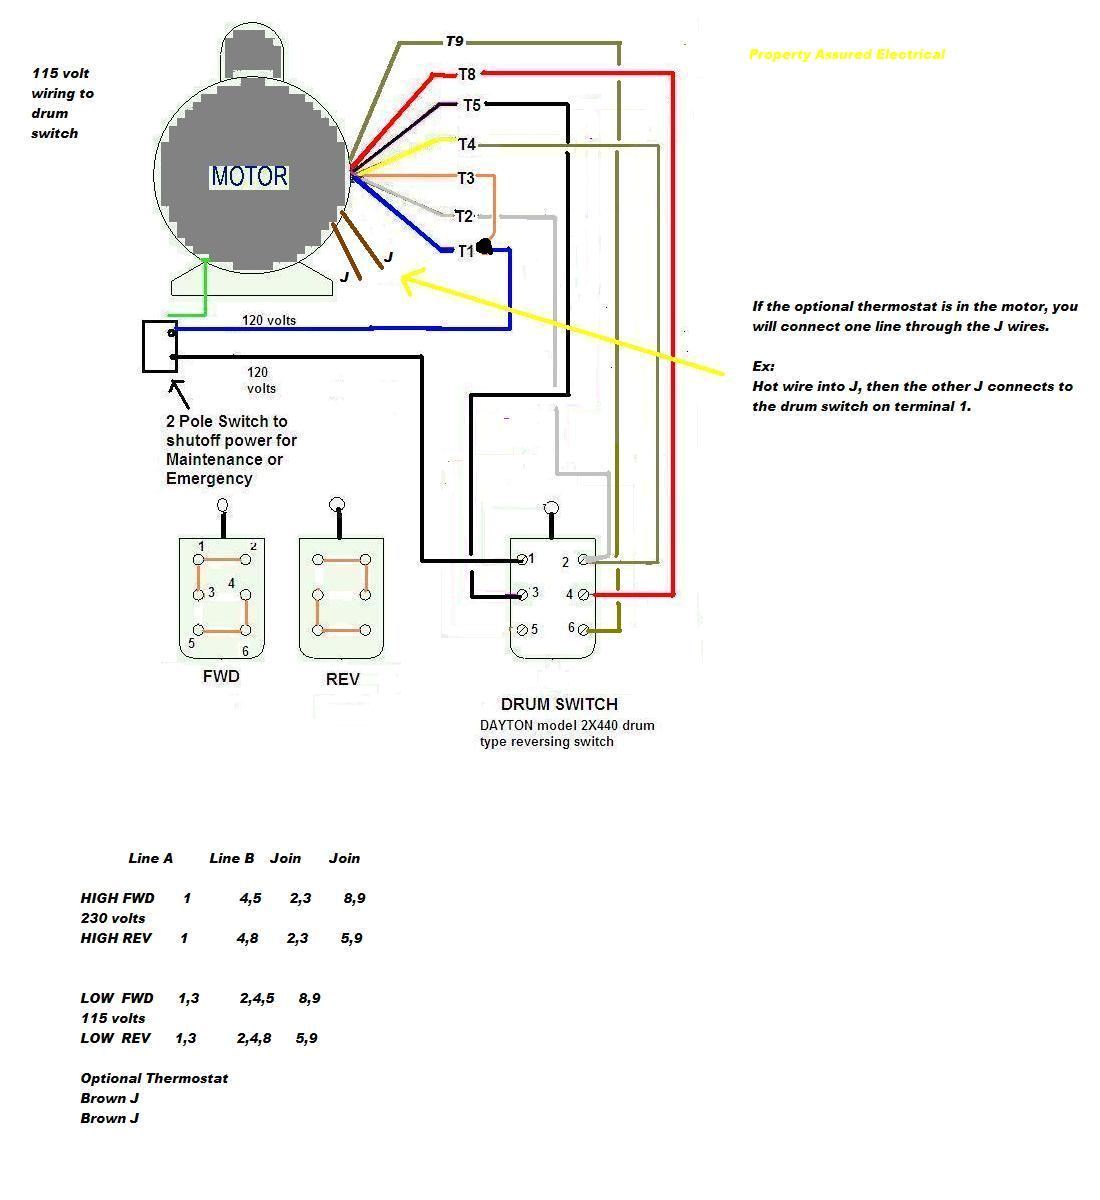 new baldor motor wiring bundadaffacom book diagram schema baldor motor l1410t wiring diagram baldor motor schematic